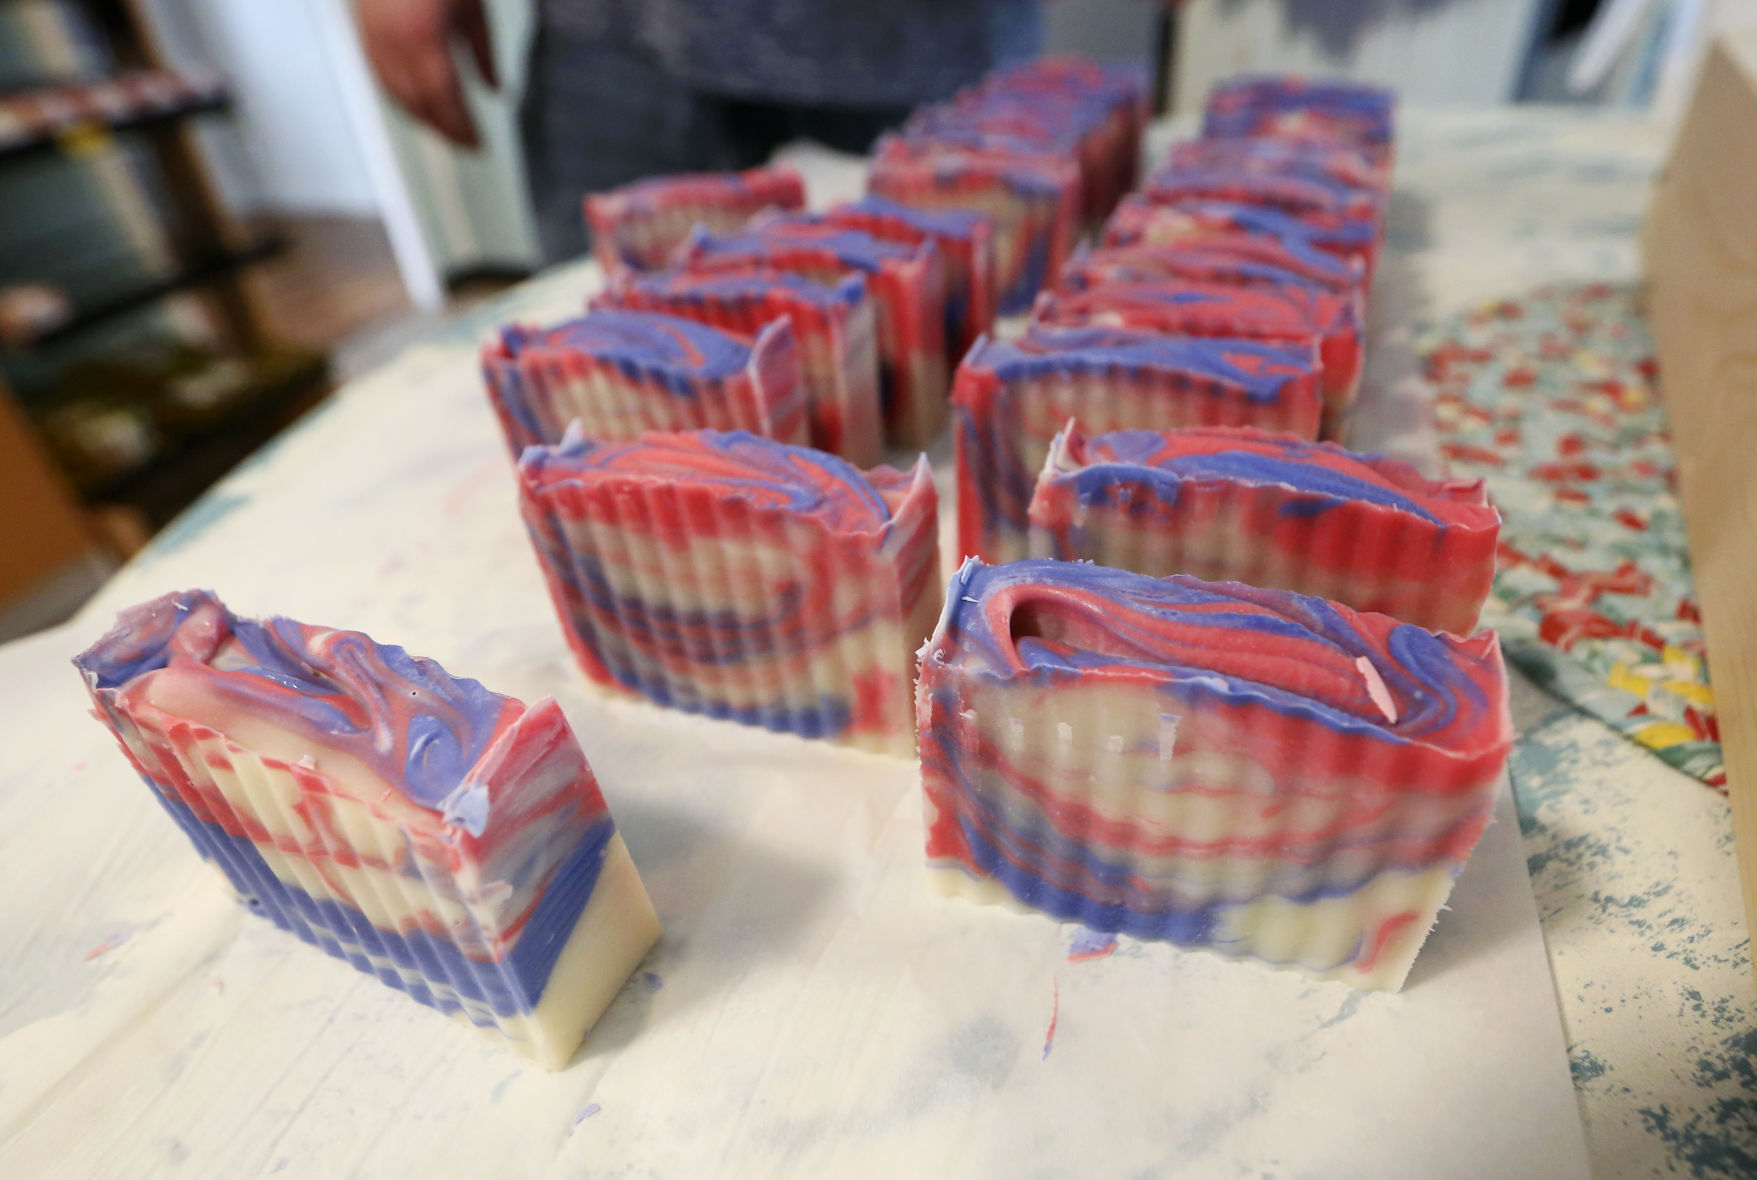 Freshly cut bars of soap. PHOTO CREDIT: NICKI KOHL